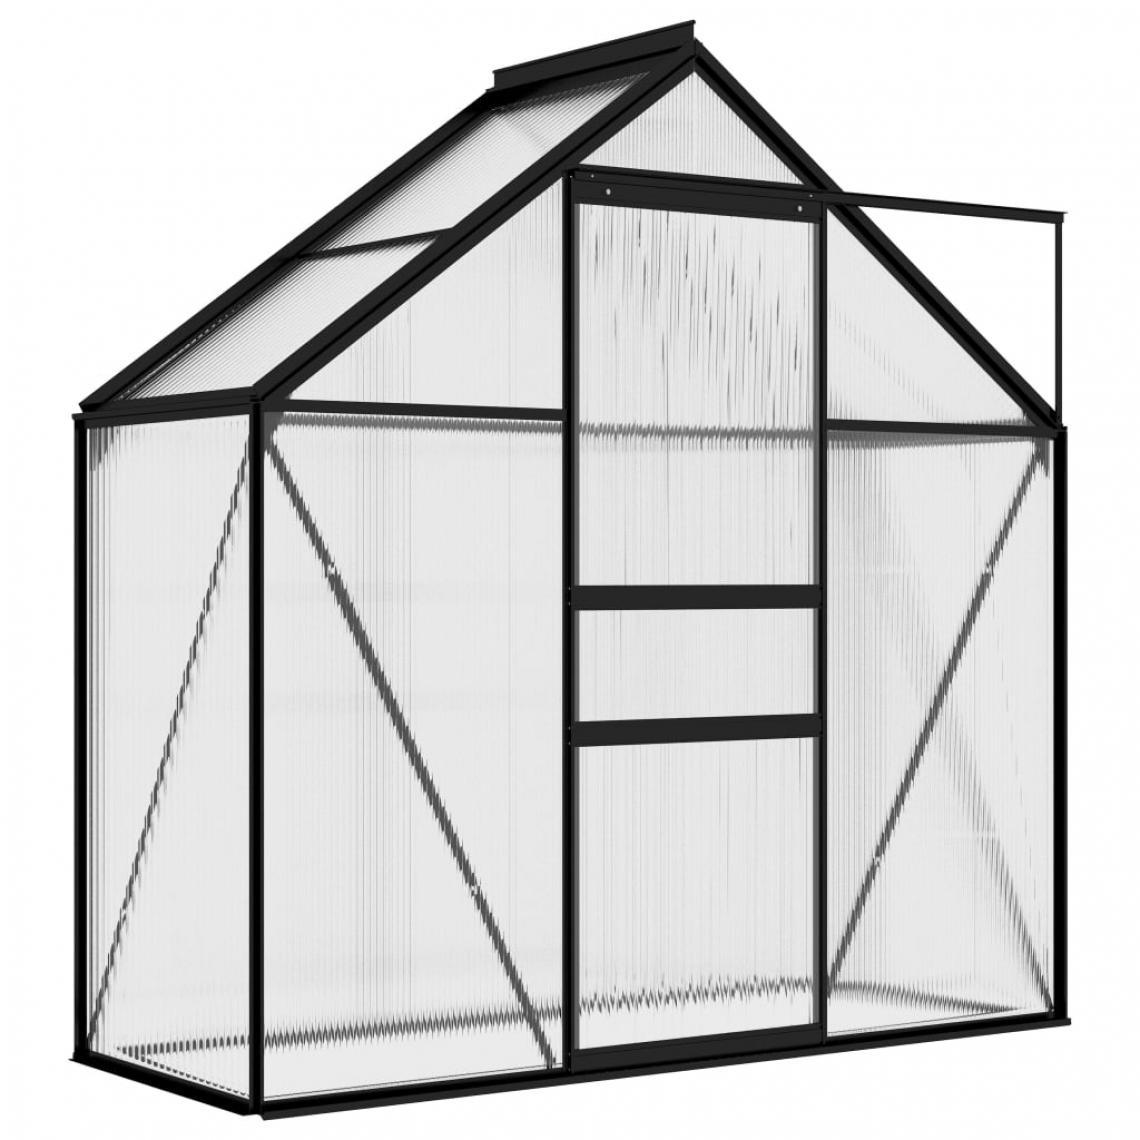 Icaverne - Icaverne - Serres de jardin reference Serre Anthracite Aluminium 1,33 m² - Serres en verre